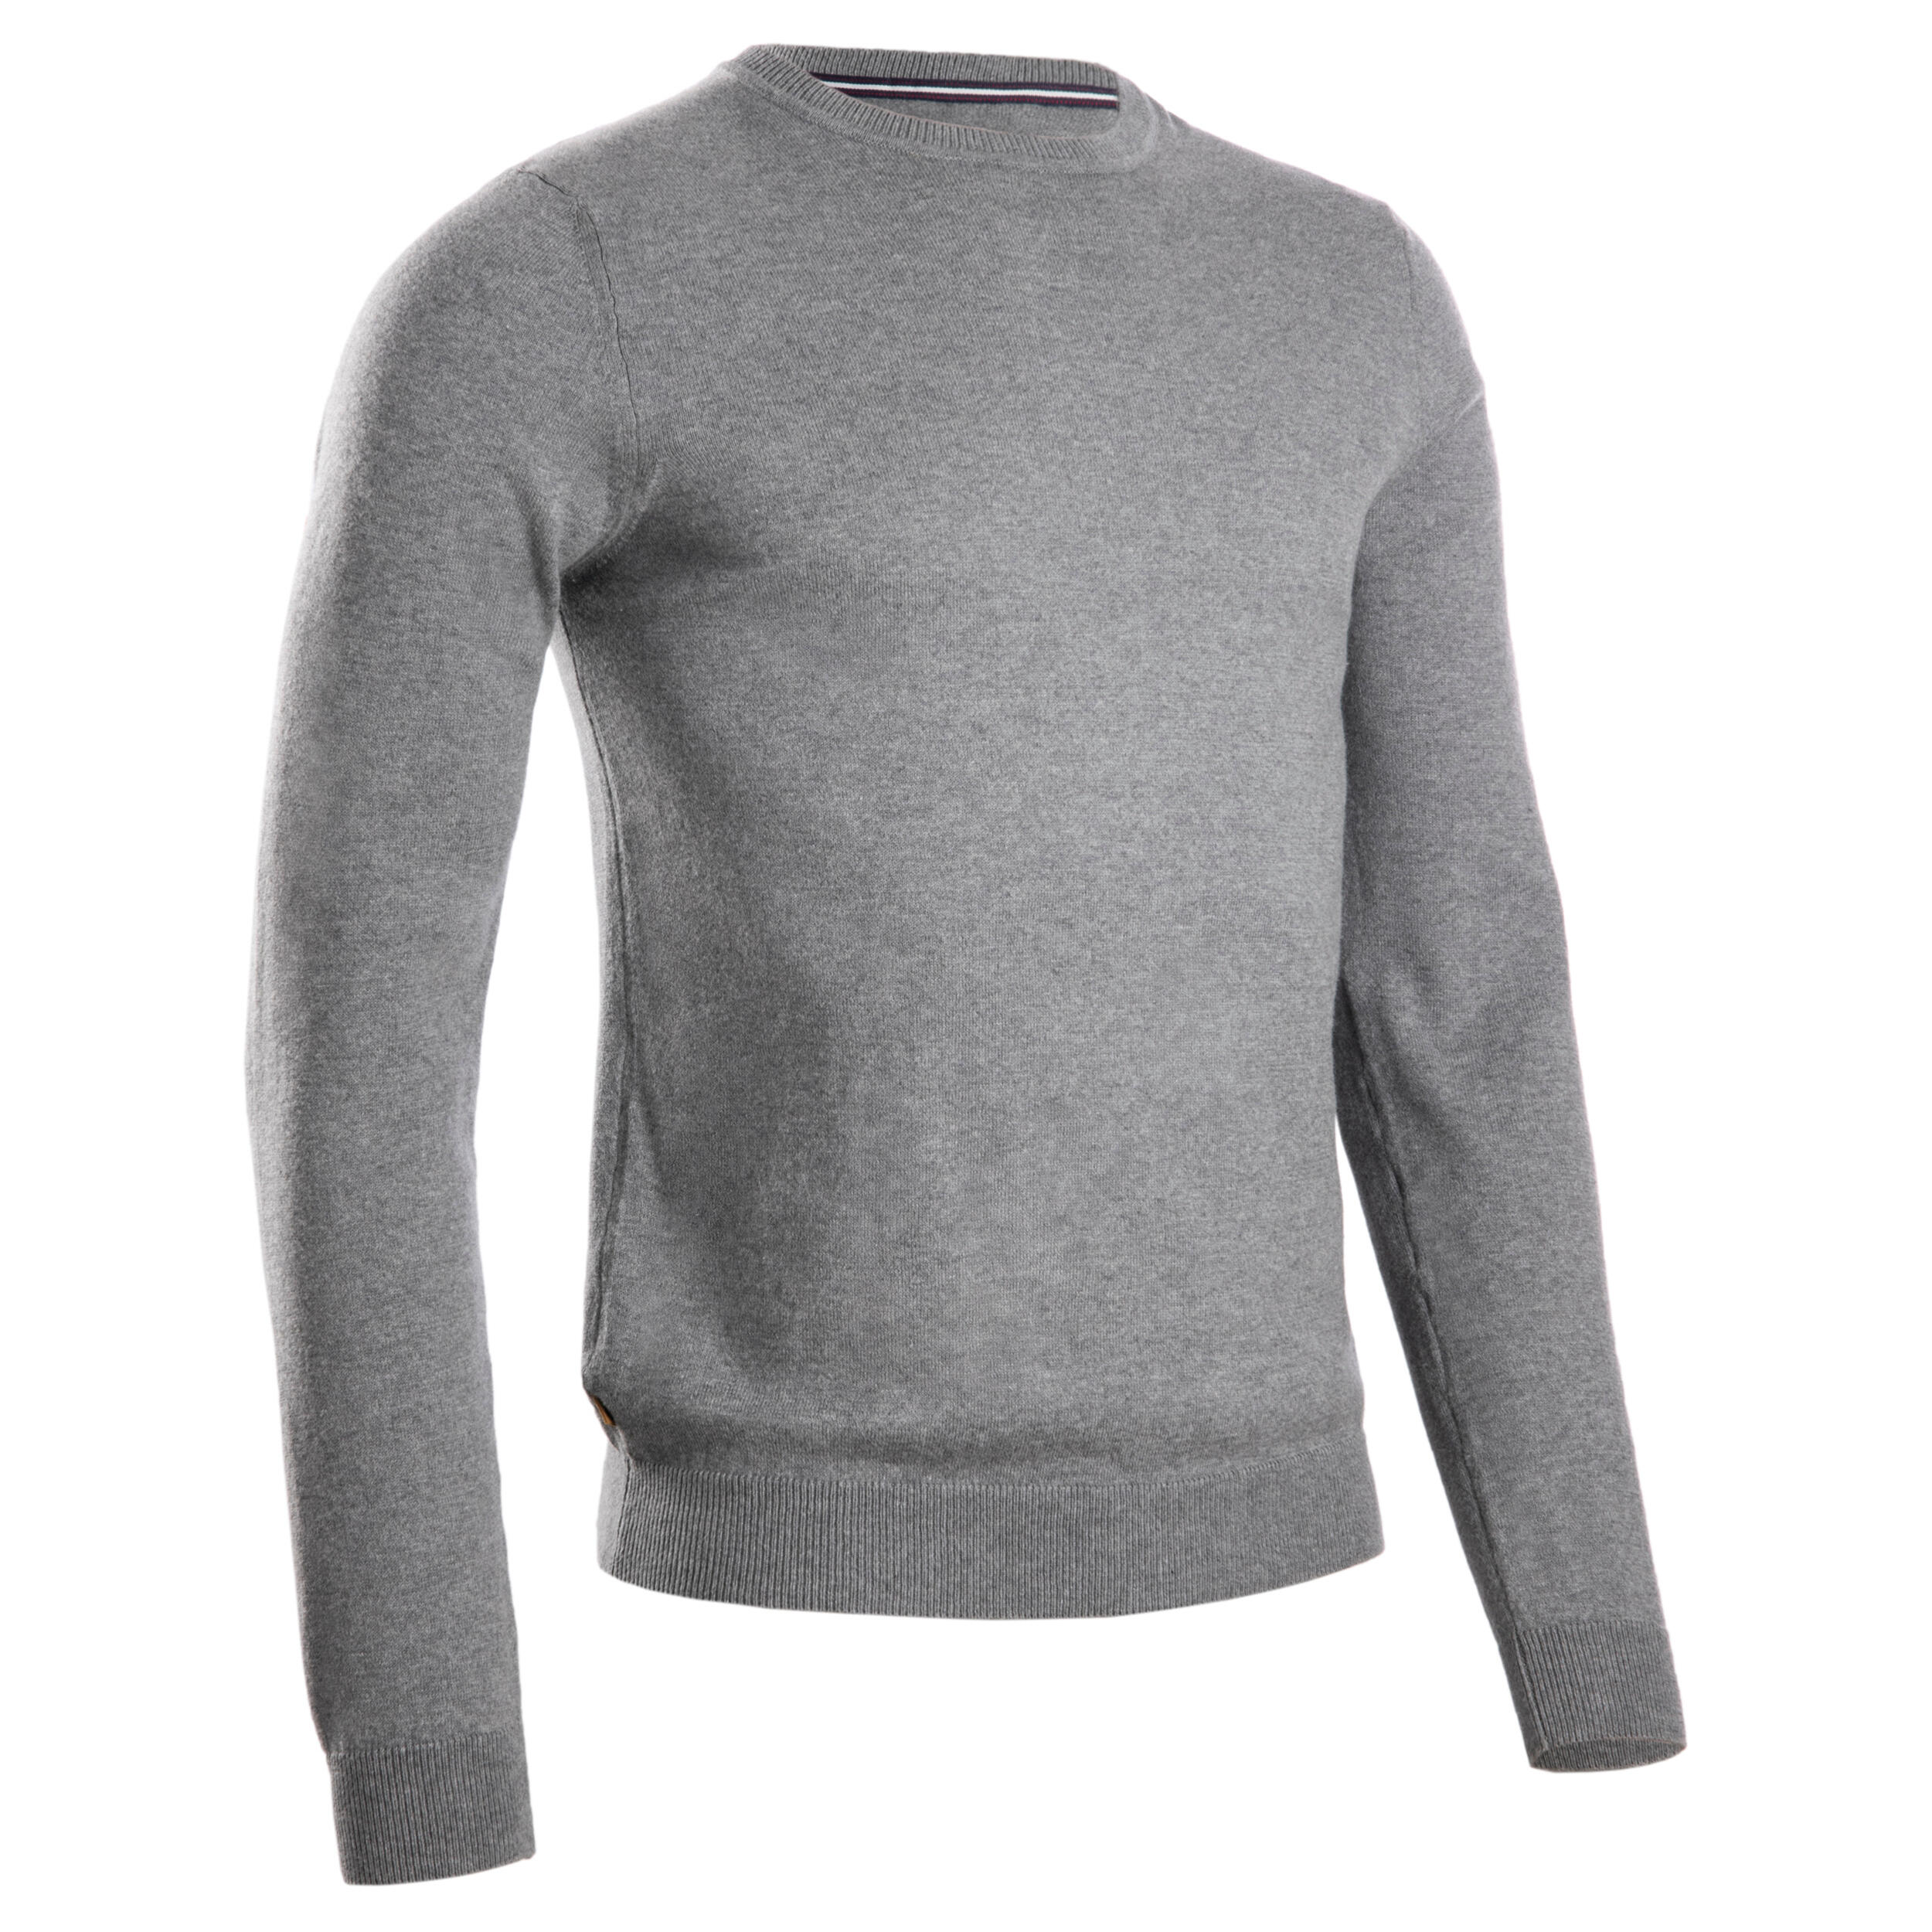 Men's Golf Sweater - MW 500 Grey - INESIS